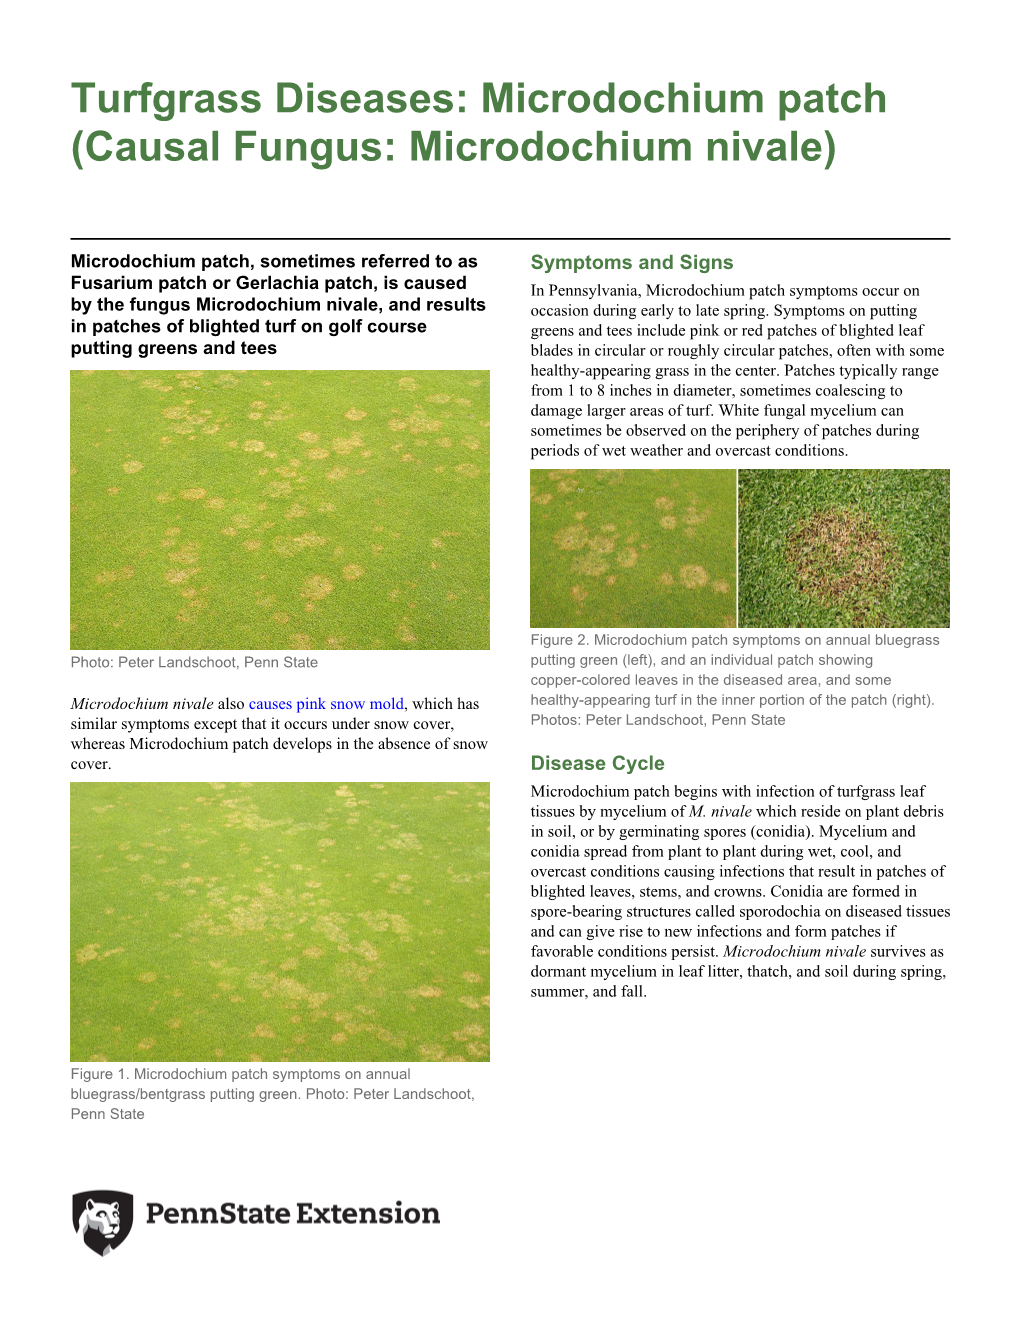 Turfgrass Diseases: Microdochium Patch (Causal Fungus: Microdochium Nivale)